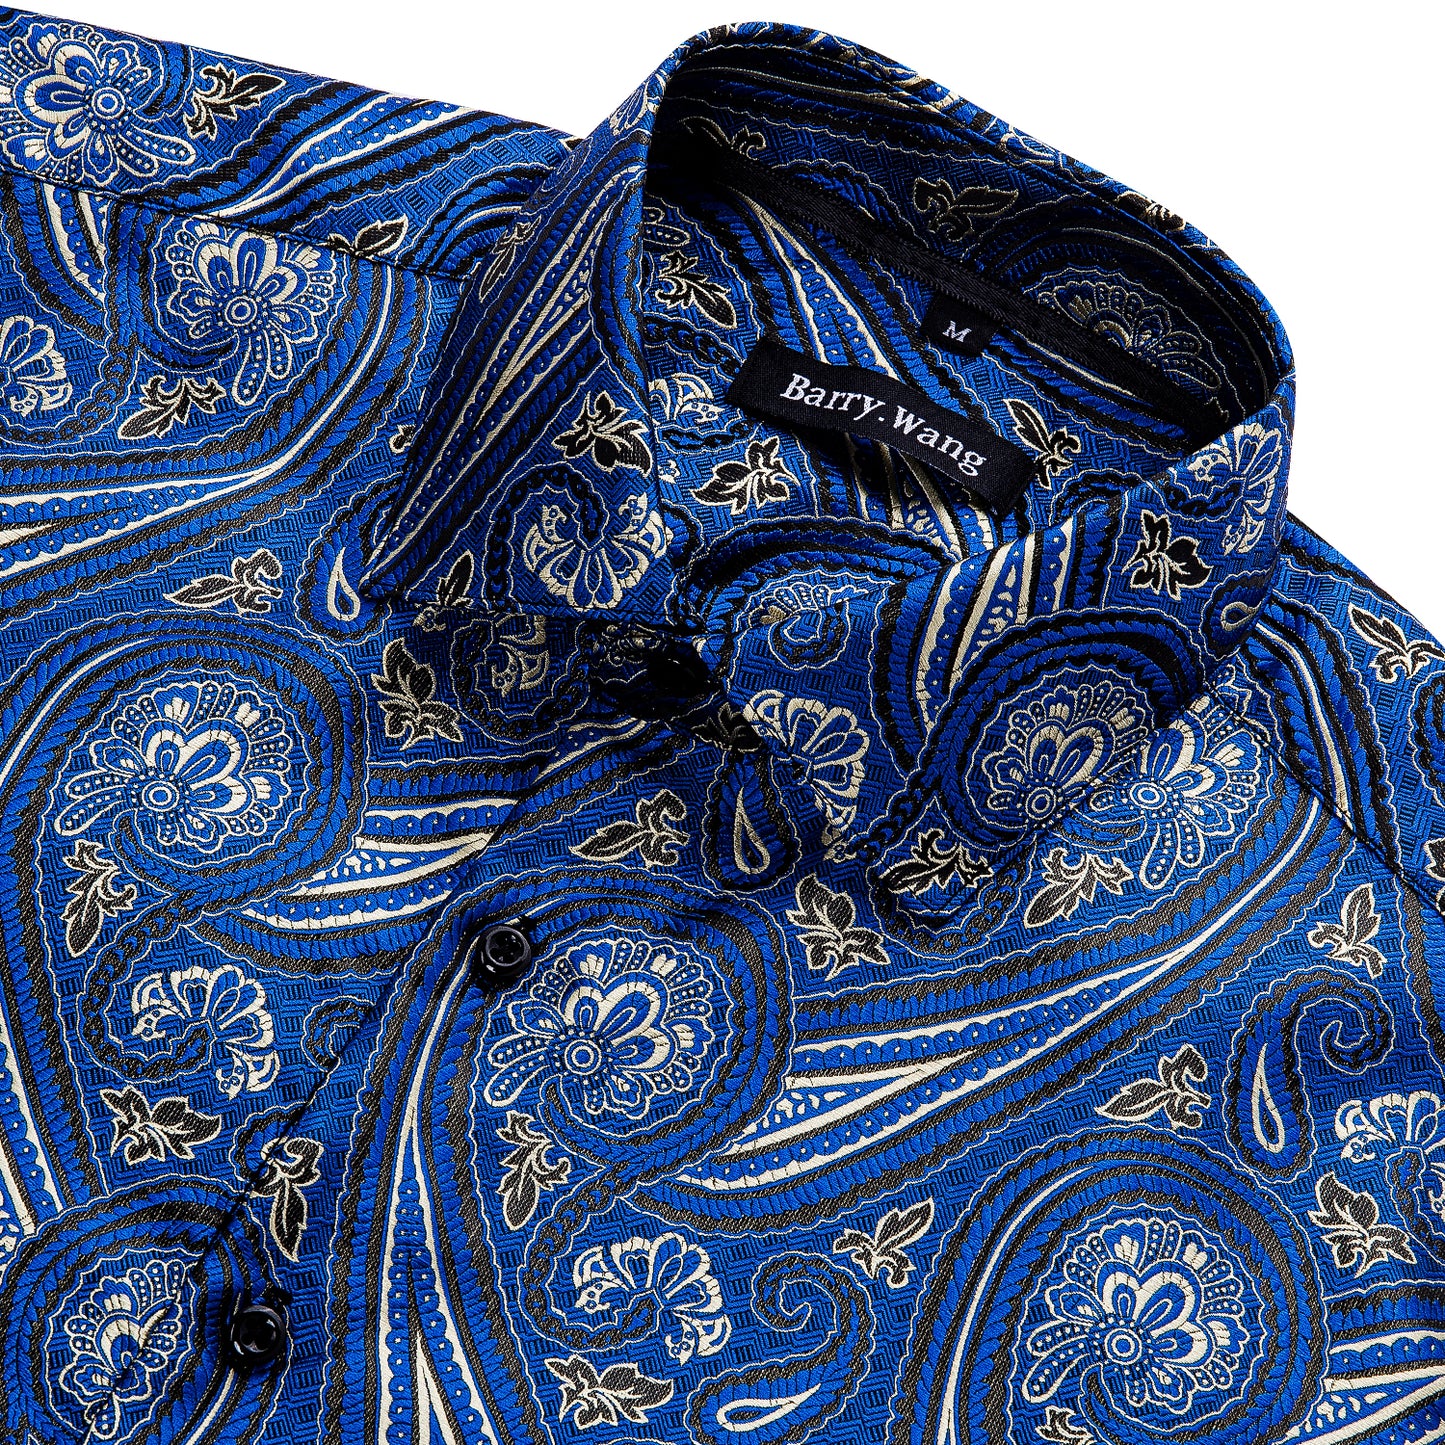 Novelty Silky Shirt - Blue Swirl